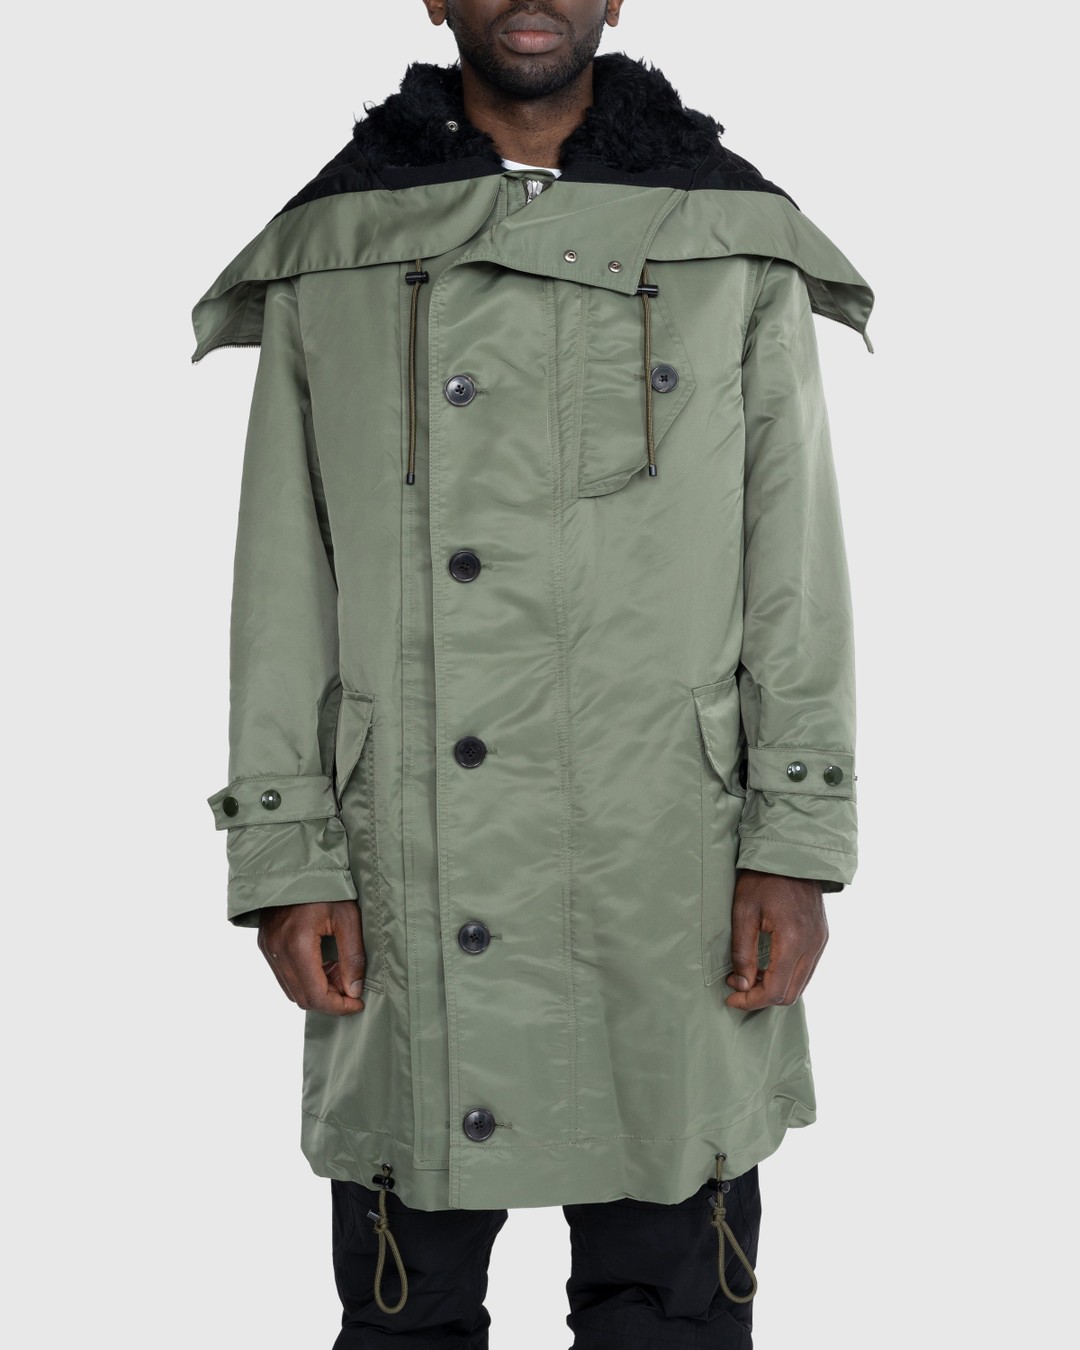 Dries van Noten – Verreli Jacket Khaki - Outerwear - Green - Image 2